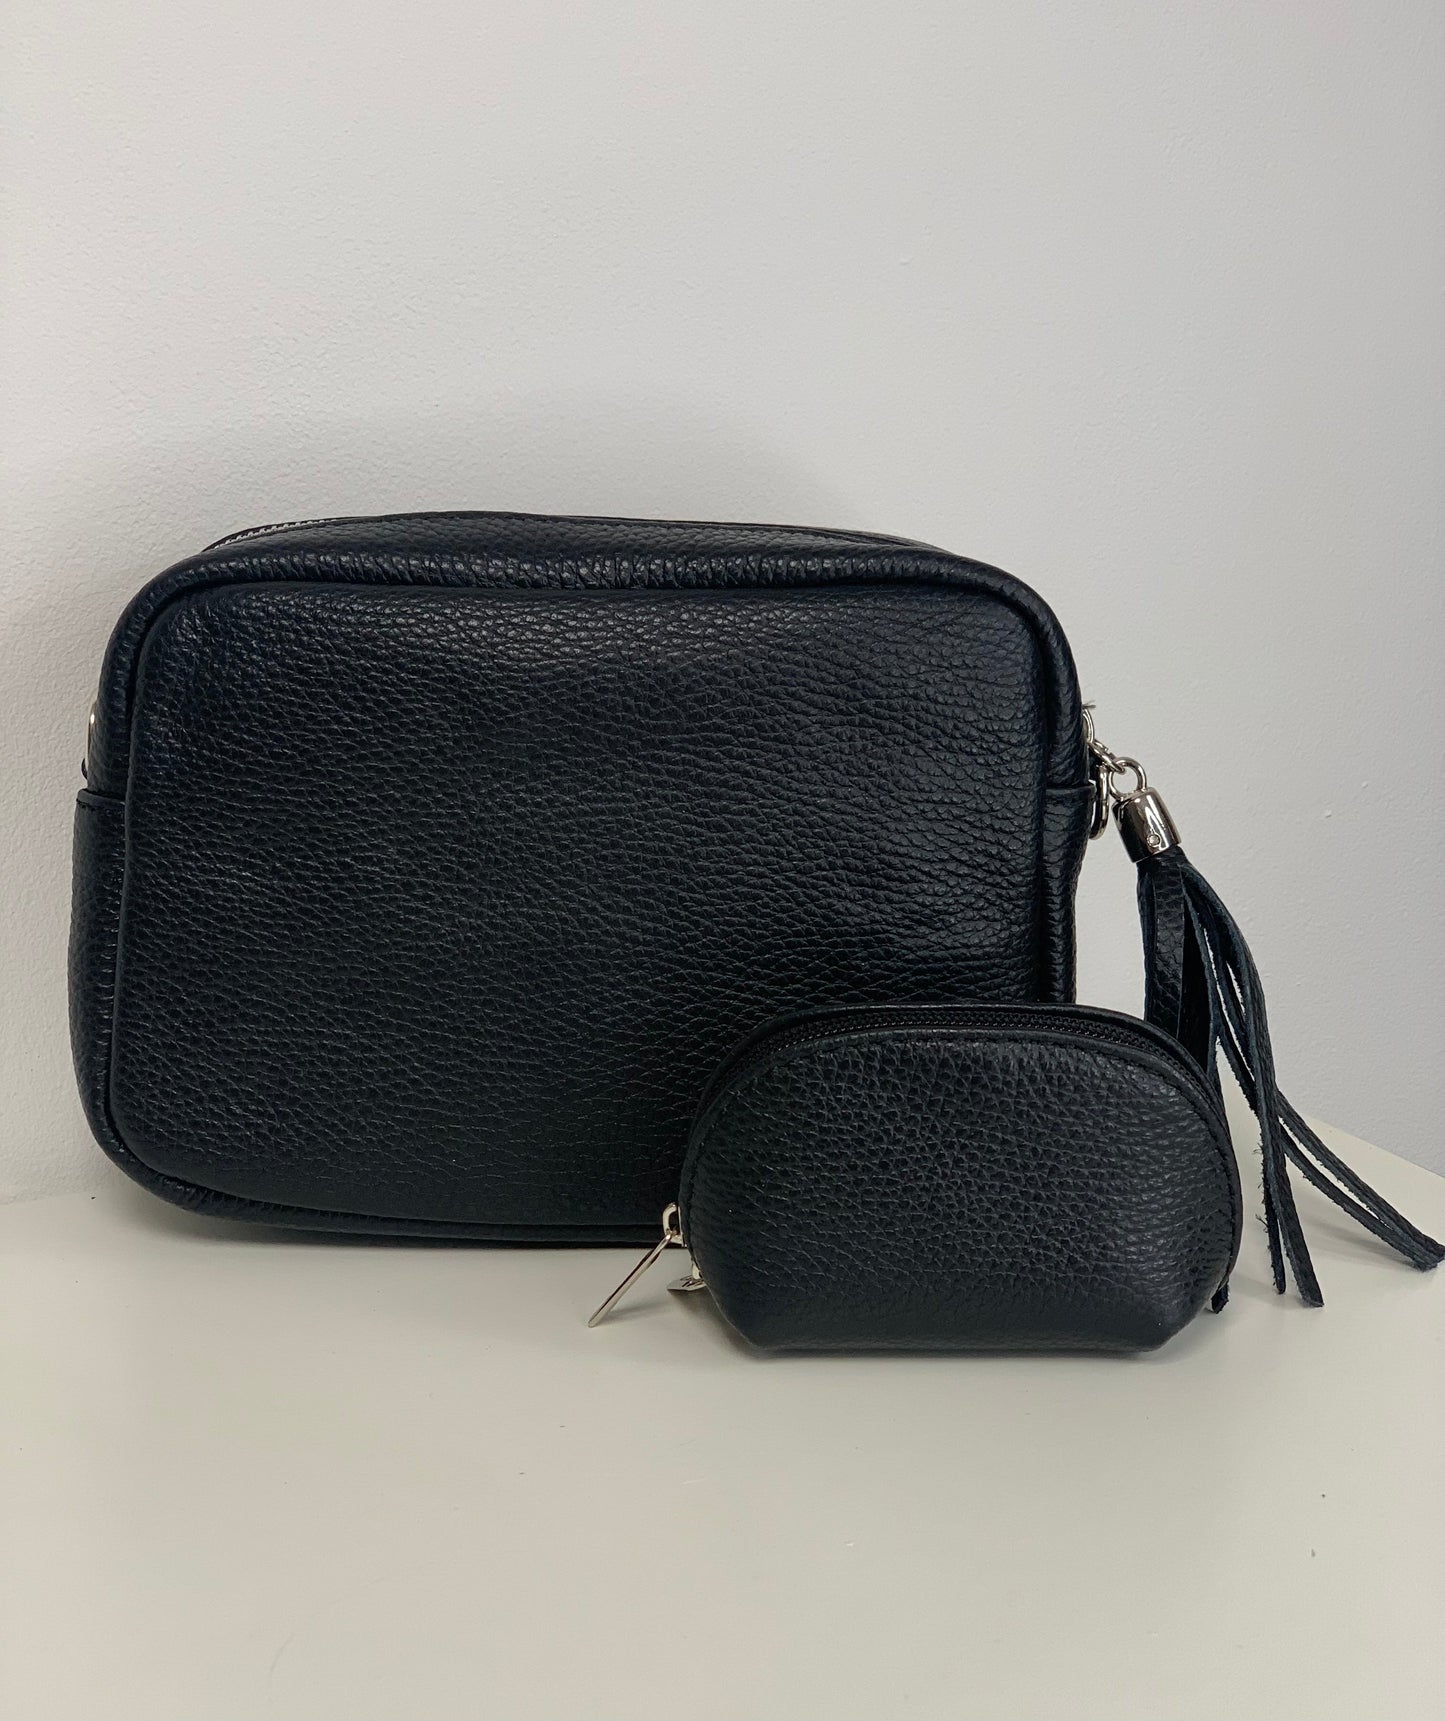 Black Camera Bag - Real Leather